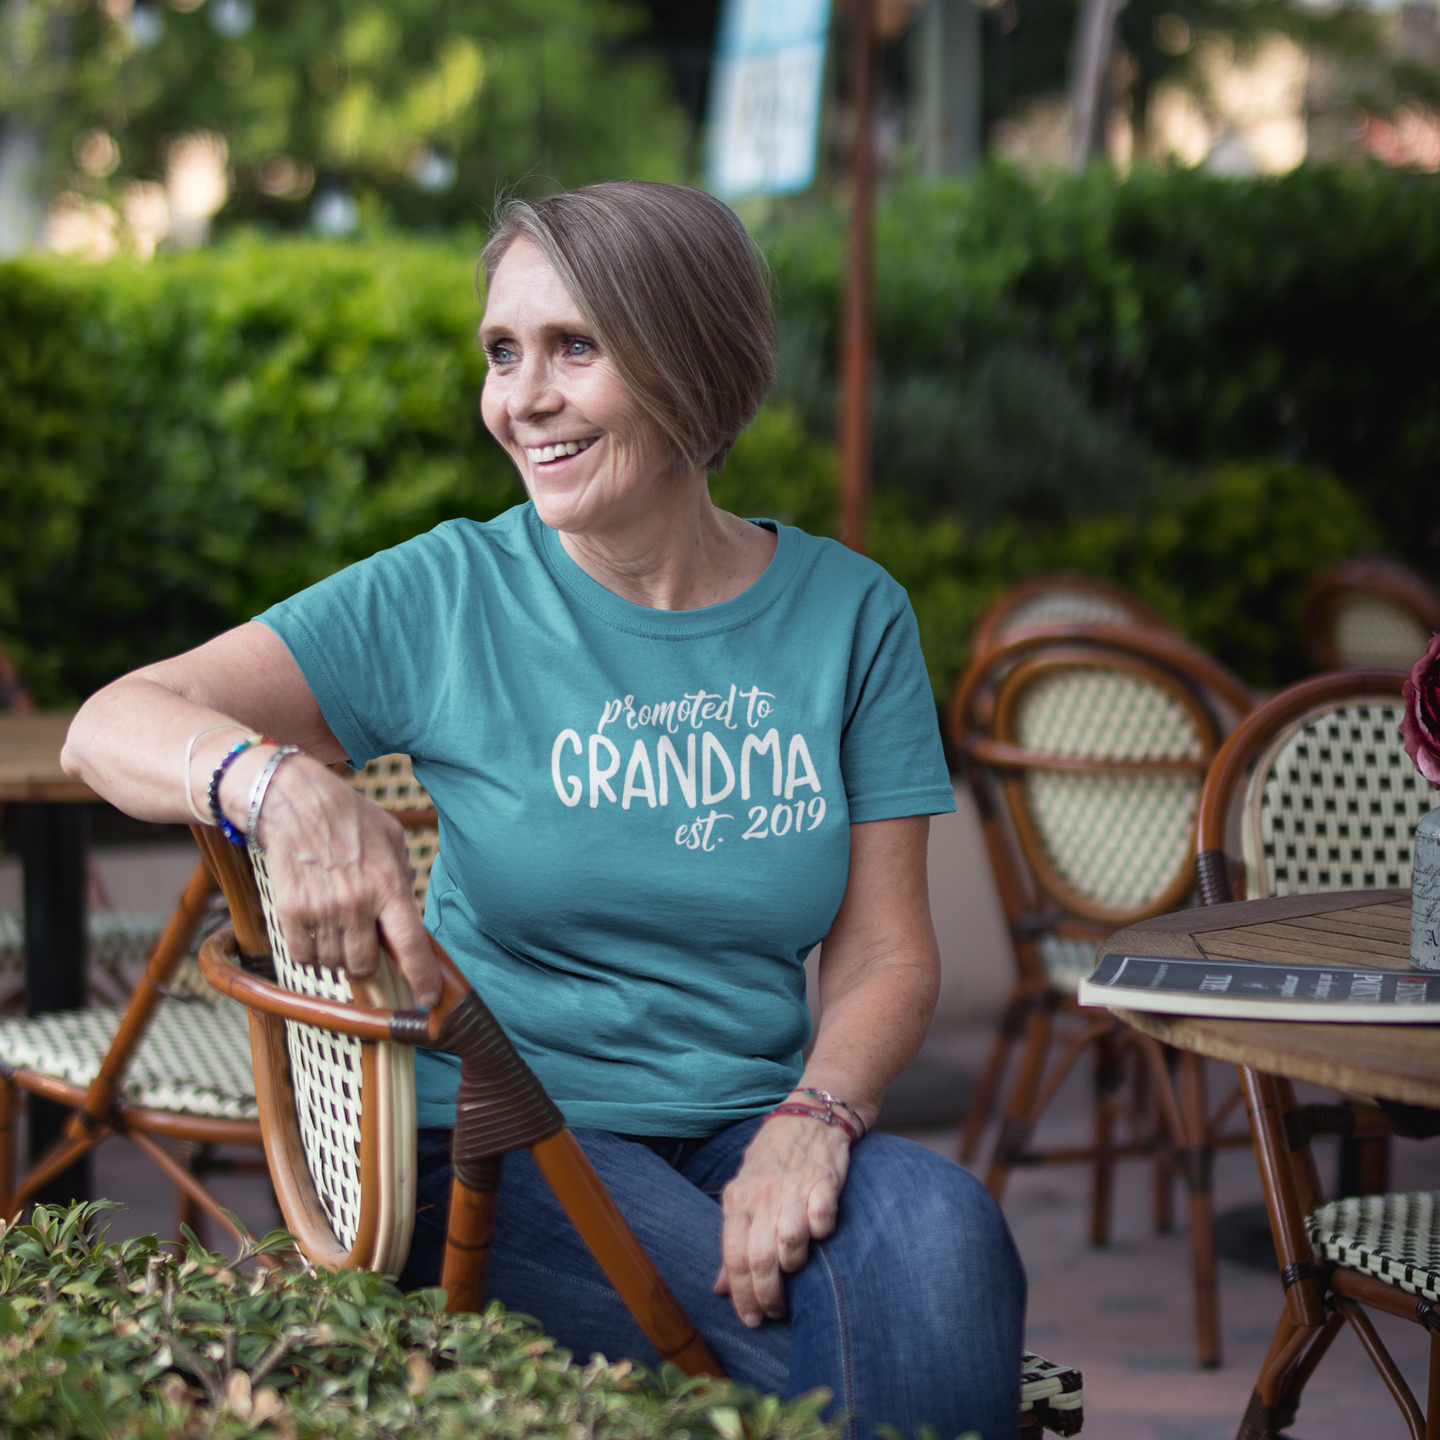 'Promoted to grandma' adult shirt